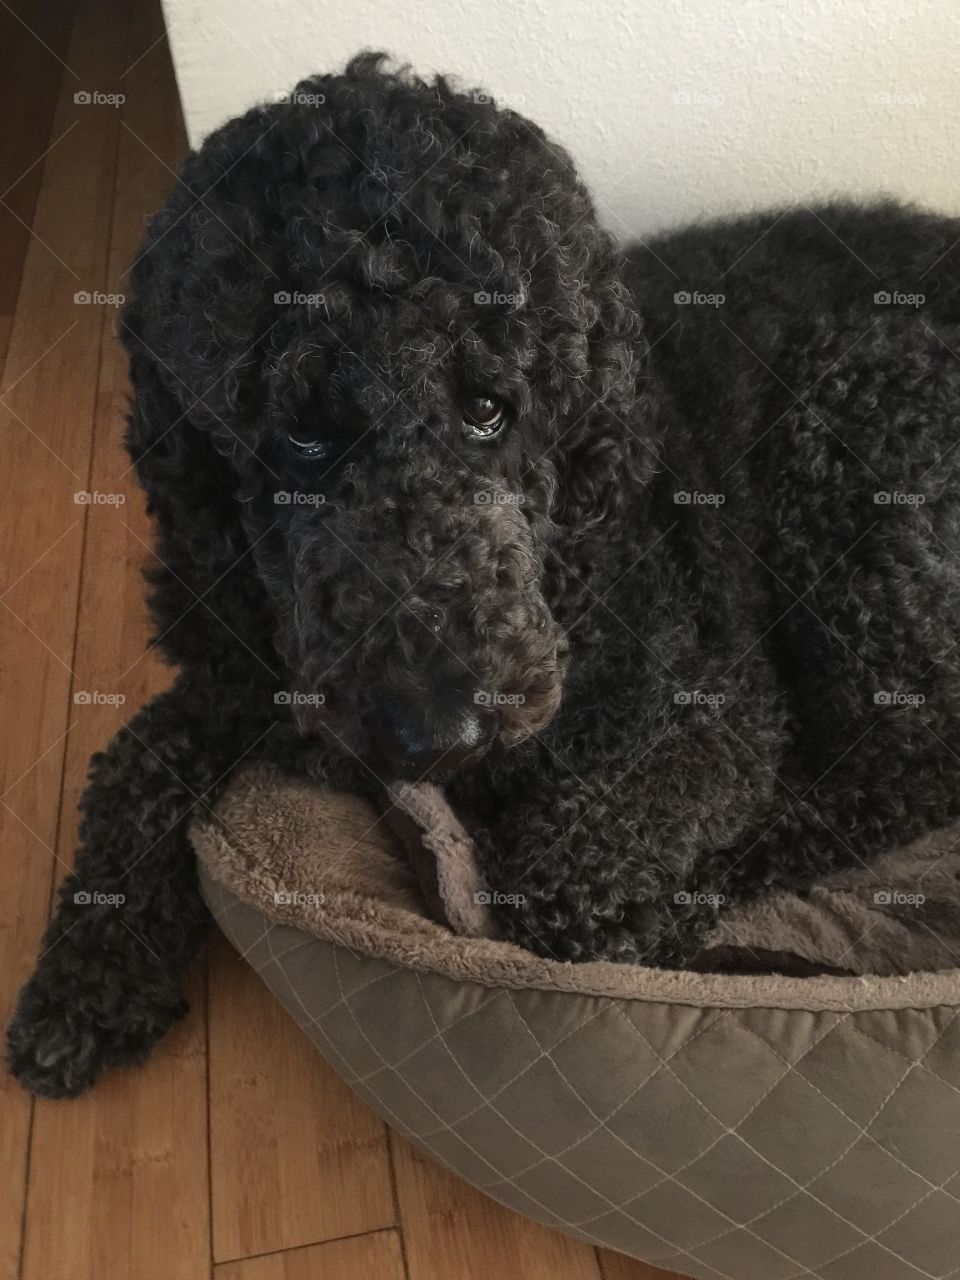 Sweet black standard poodle with sad puppy eyes